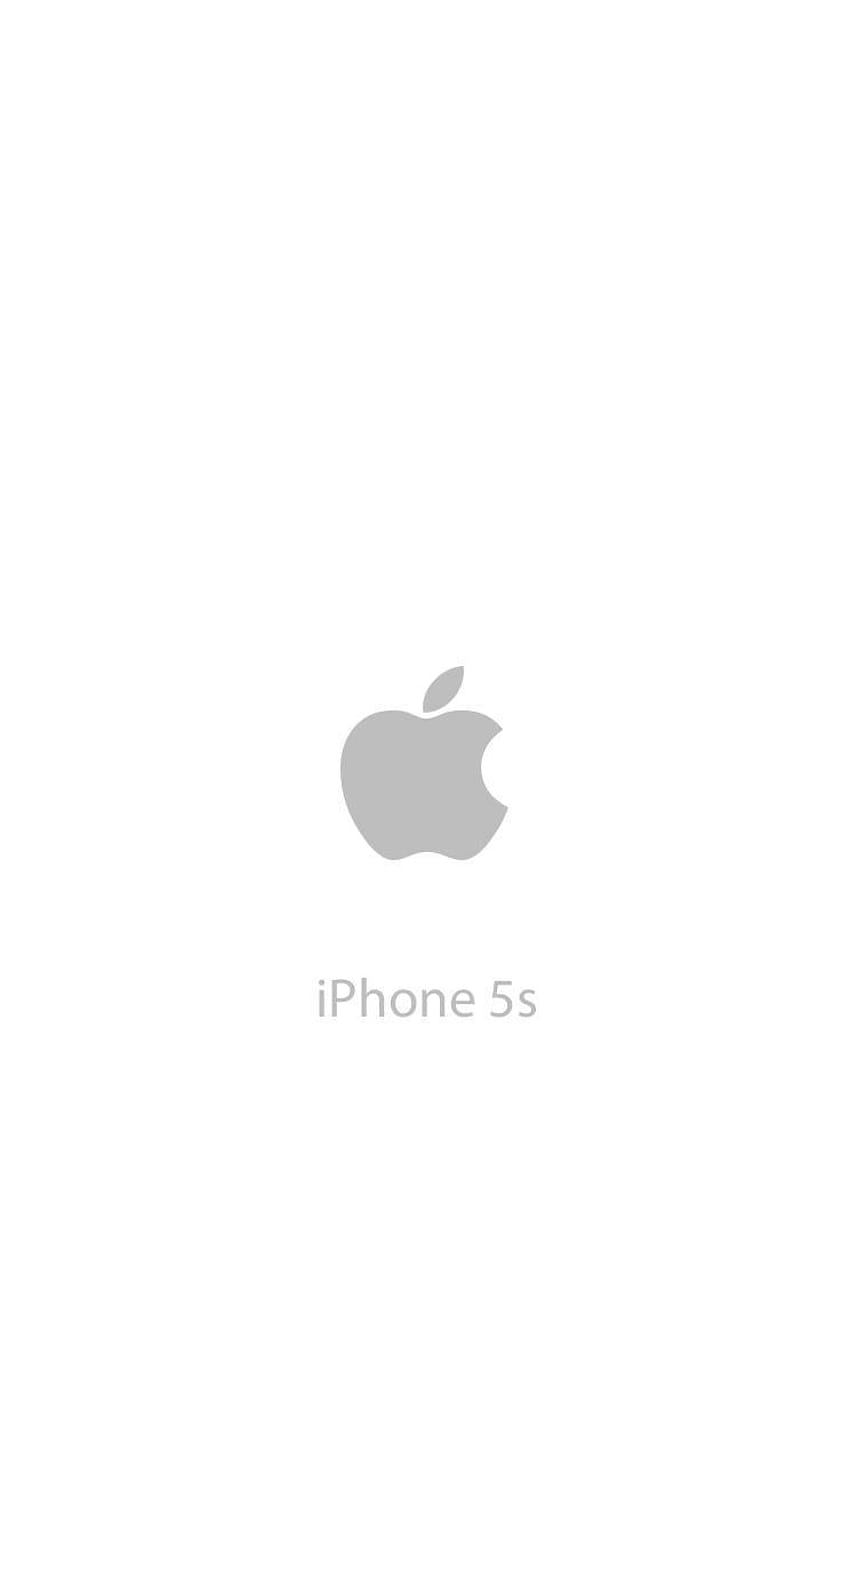 iPhone 5 Apple HD phone wallpaper